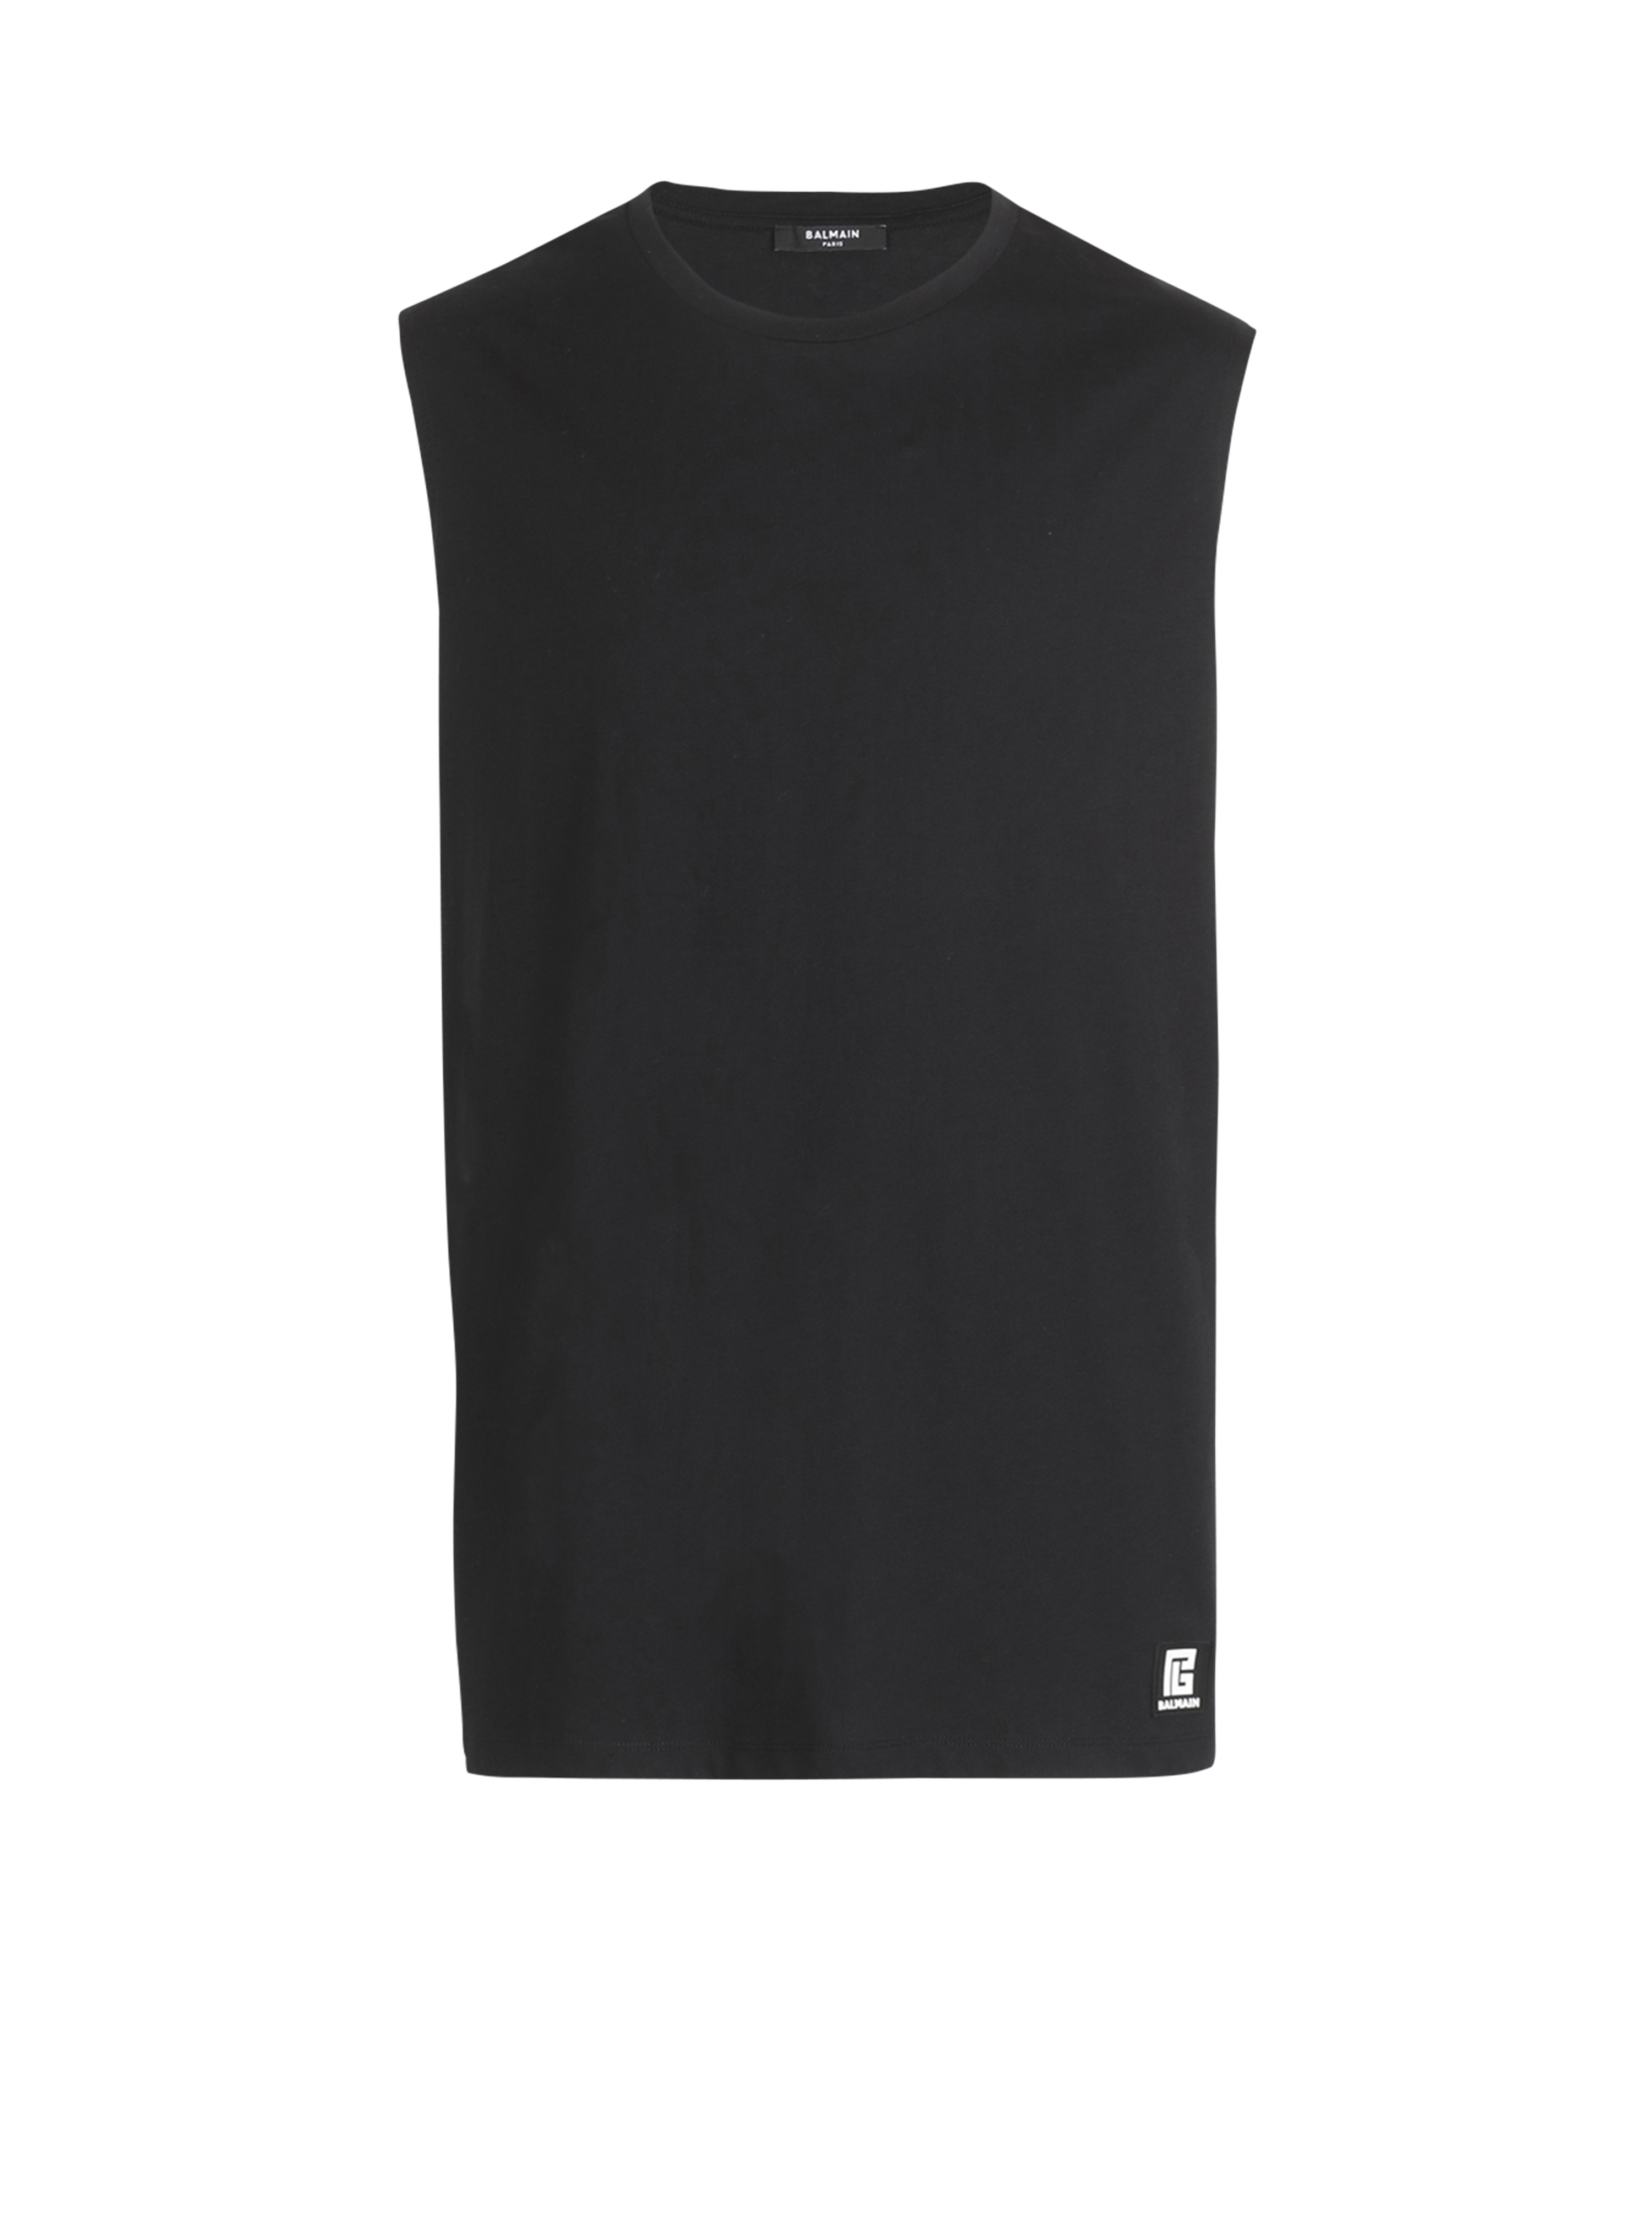 Cotton T-shirt with Balmain logo print, black